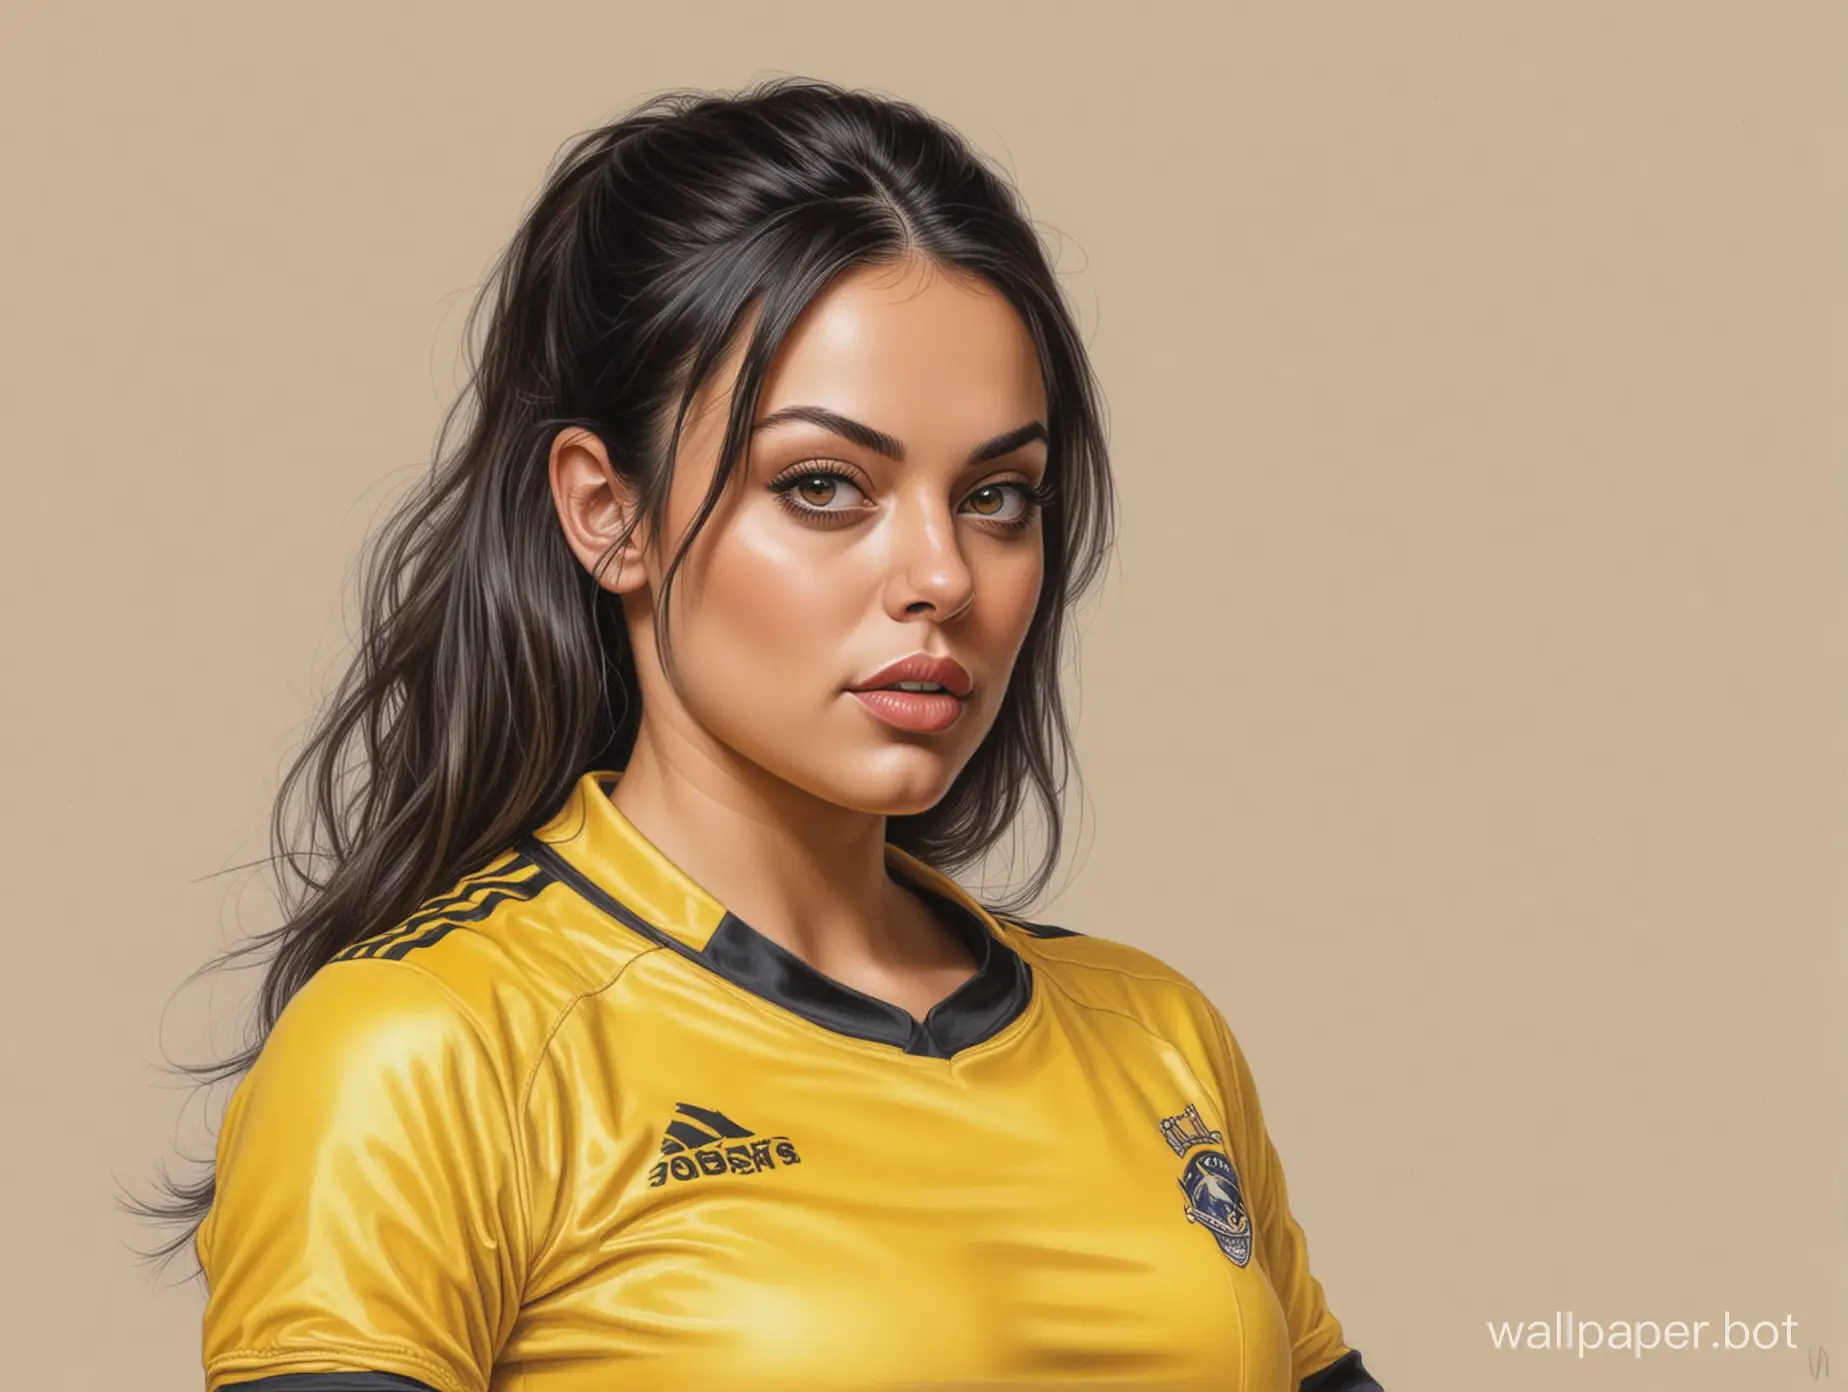 Realistic-Portrait-Sketch-of-Mila-Kunis-in-YellowBlack-Soccer-Uniform